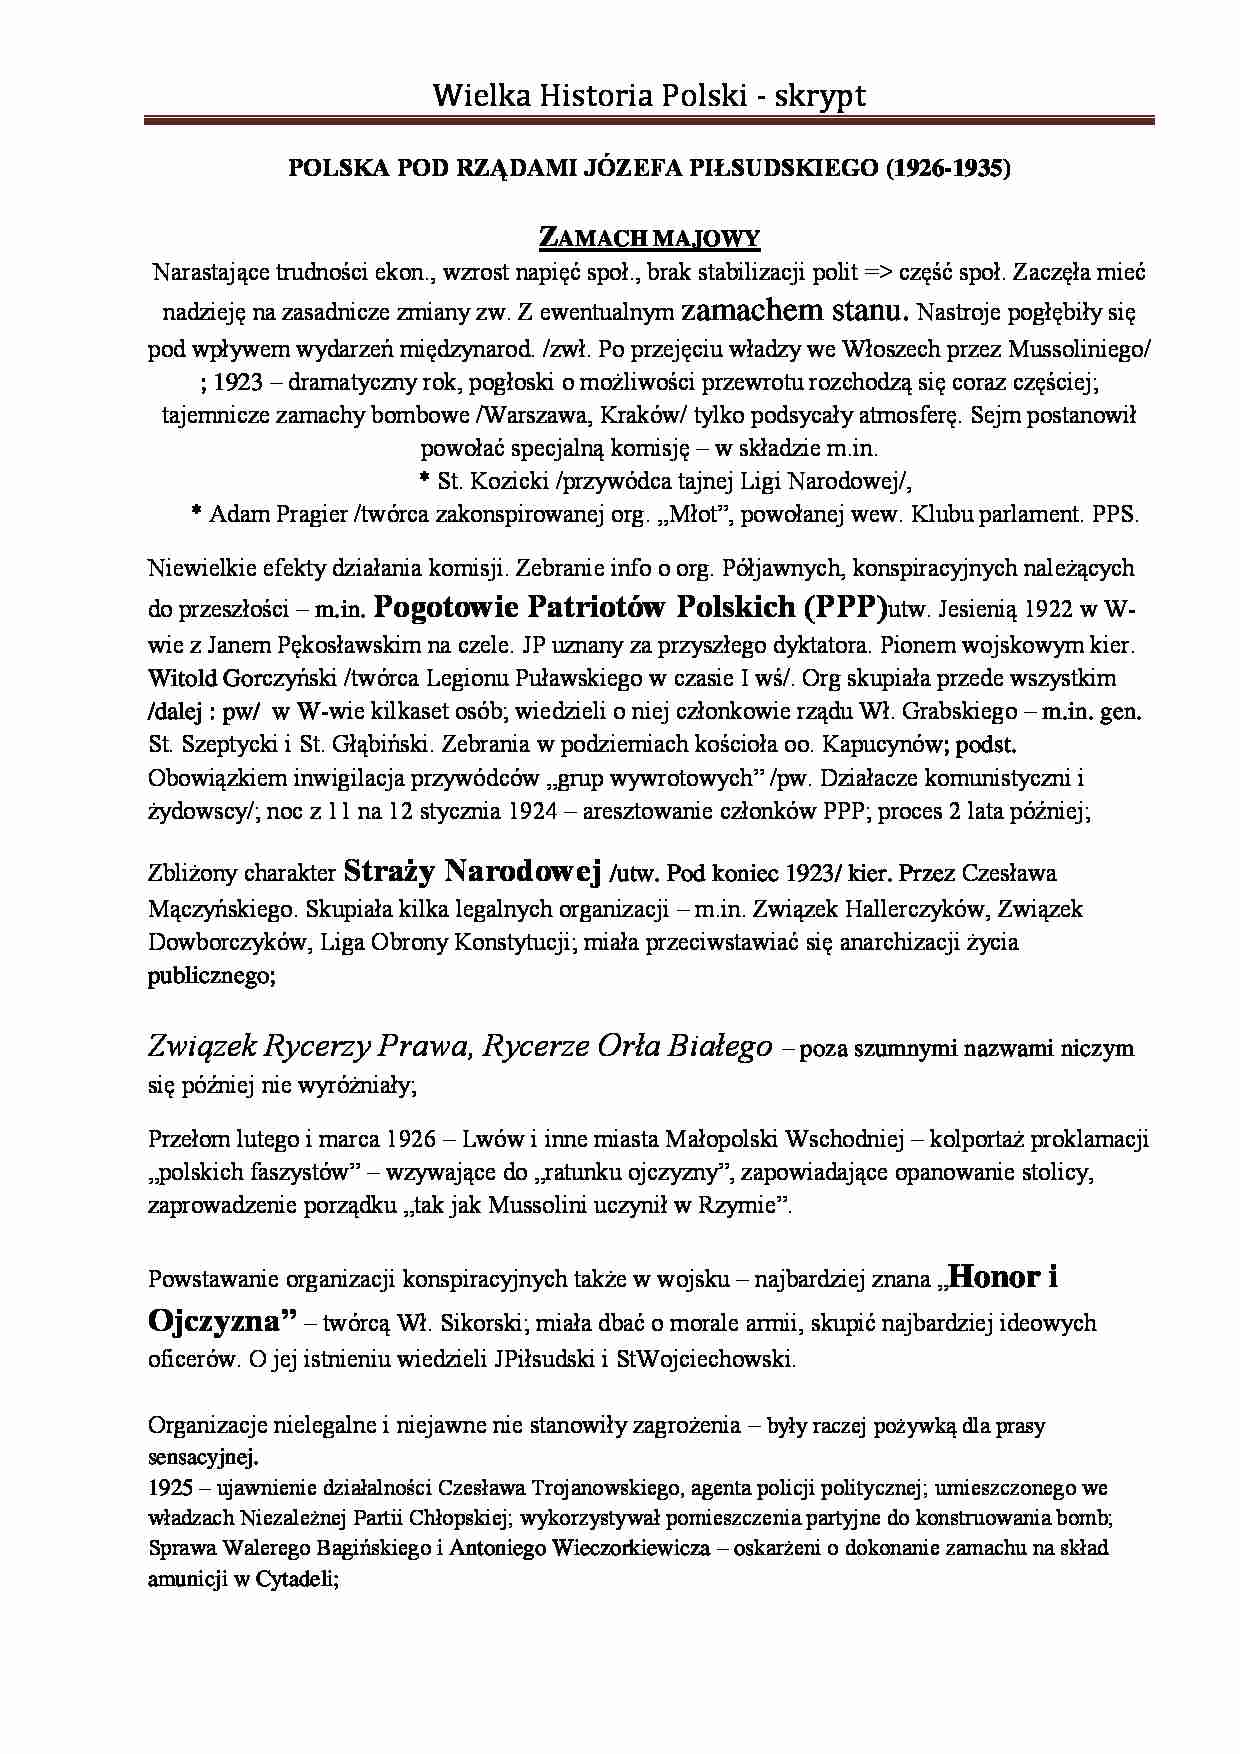  Wielka Historia Polski - skrypt - strona 1